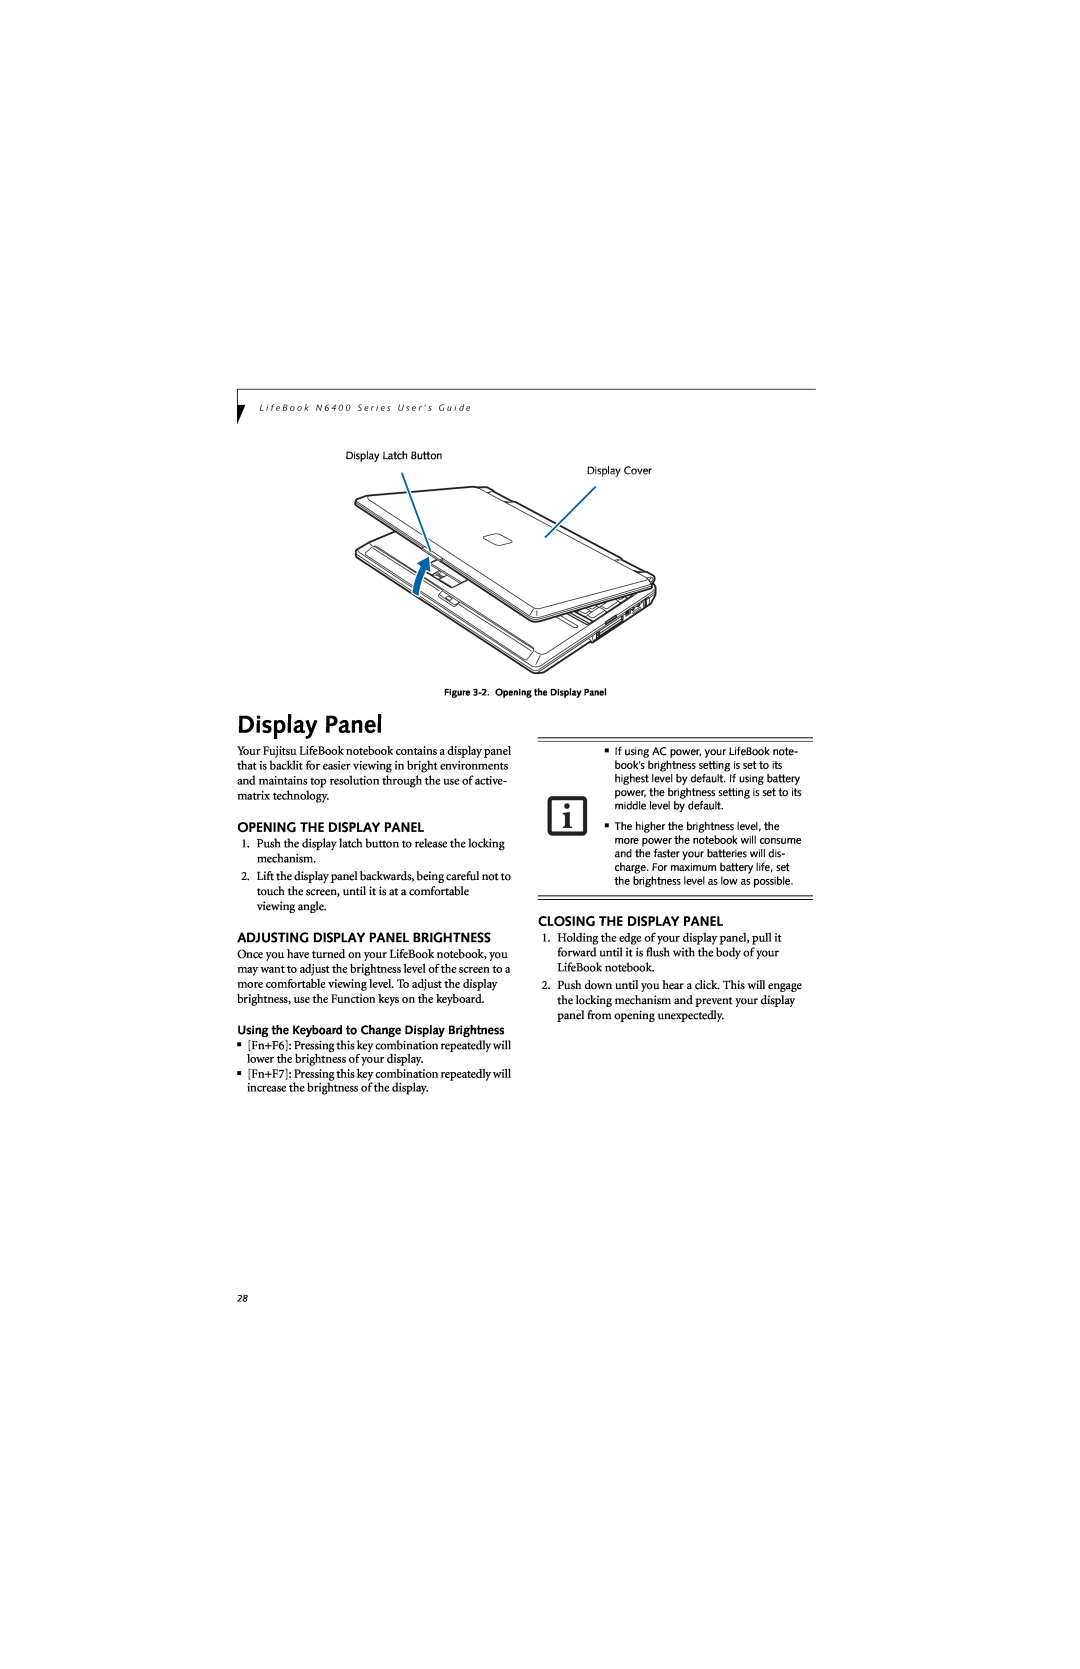 Fujitsu N6420 manual Opening The Display Panel, Adjusting Display Panel Brightness, Closing The Display Panel 